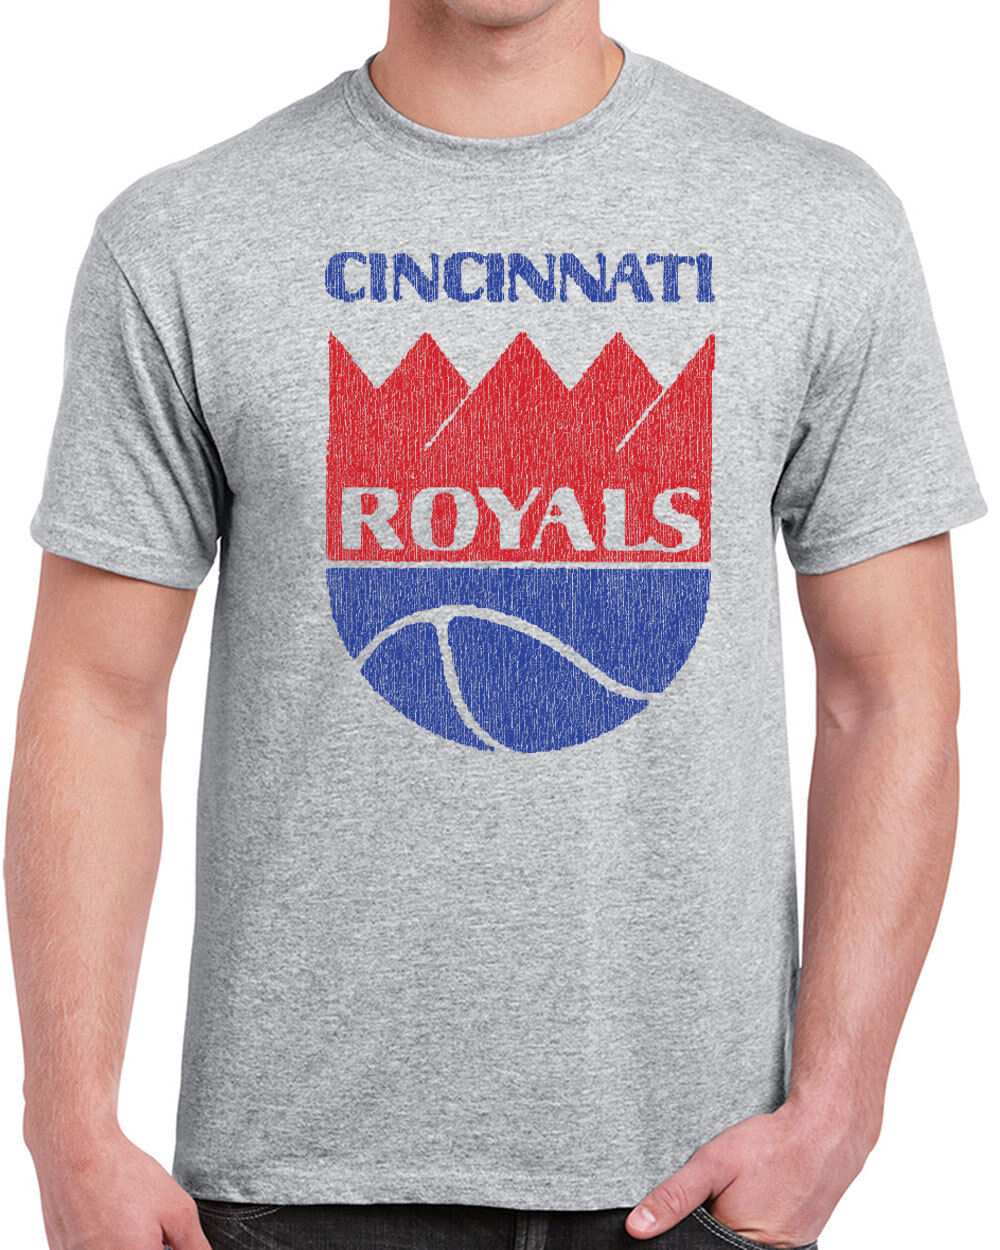 304 Royals mens T-shirt vintage cincinnati basketball sports jersey 70s retro